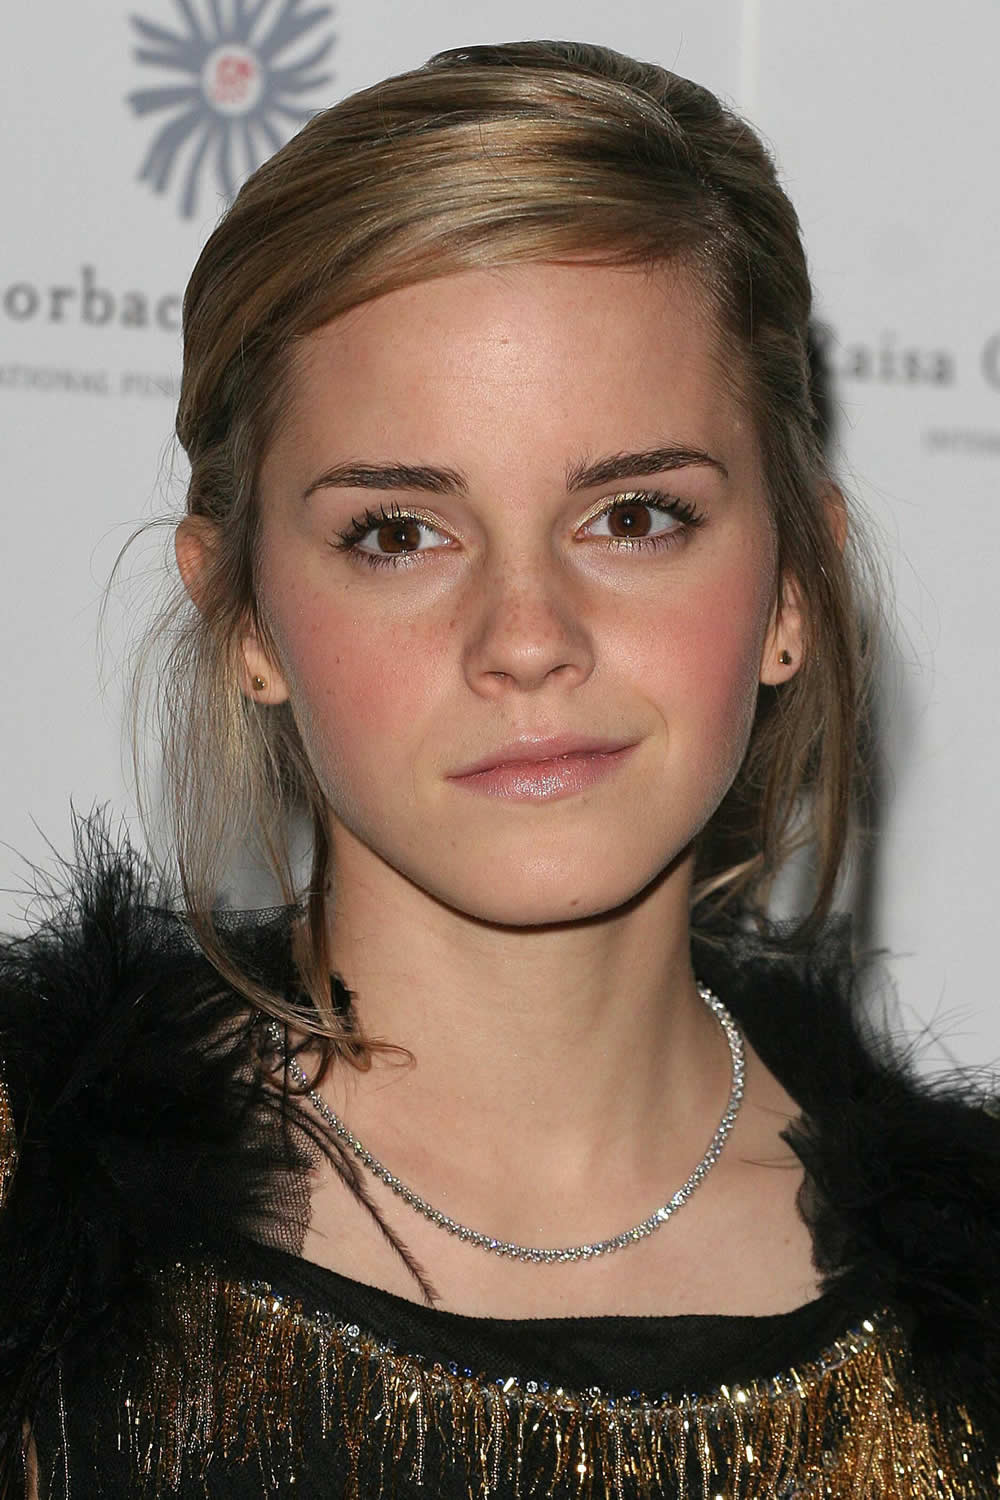 G}Eg\Emma Watson